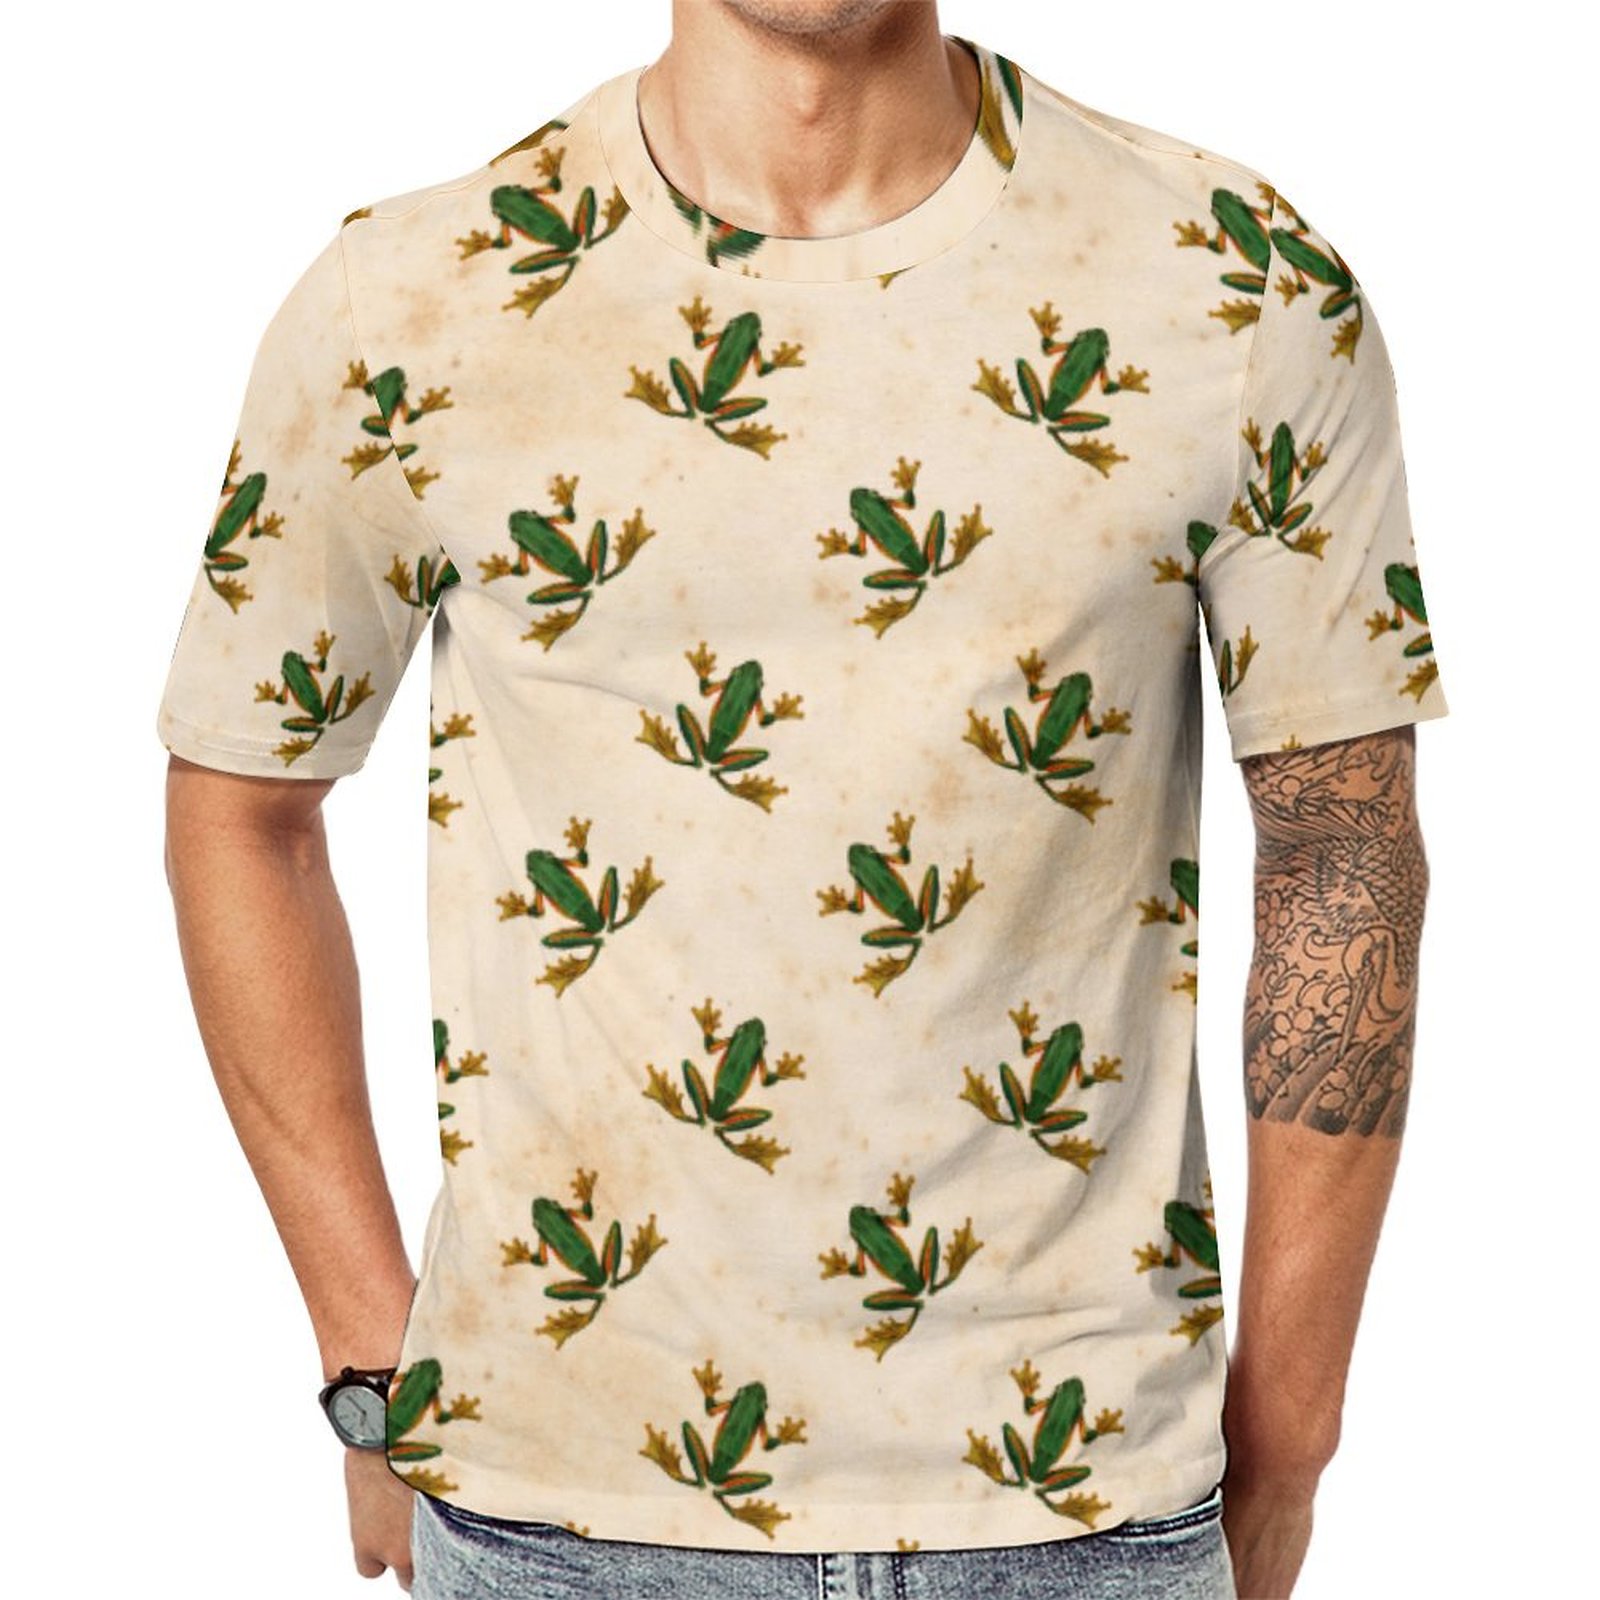 Green Frog On Khaki Short Sleeve Print Unisex Tshirt Summer Casual Tees for Men and Women Coolcoshirts